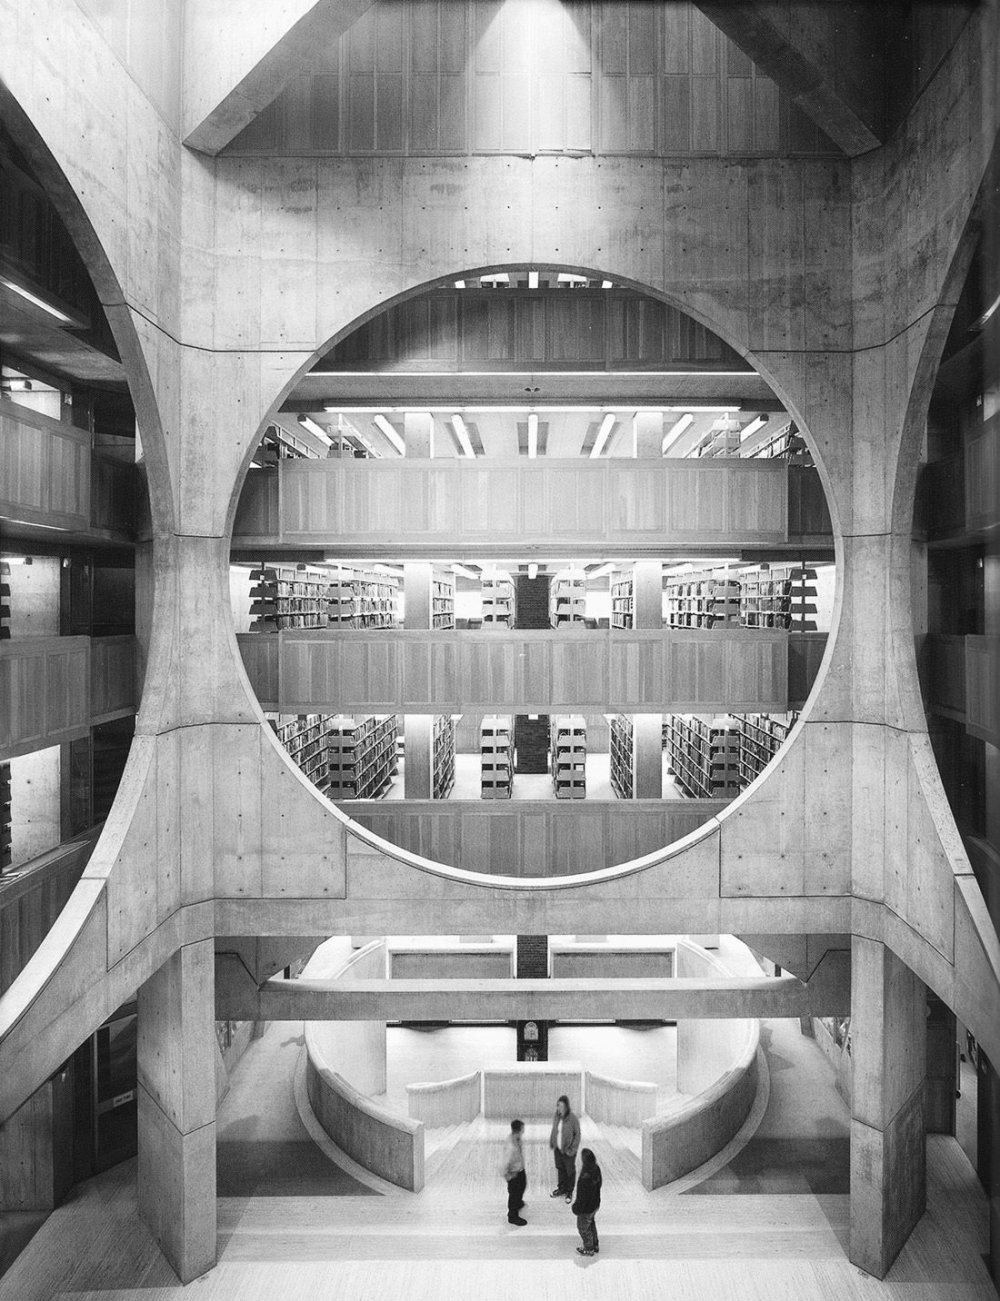 2. Архитектор Луис Кан. Академия Филлипса в Эксетере, США, построено в 1965-71 годах